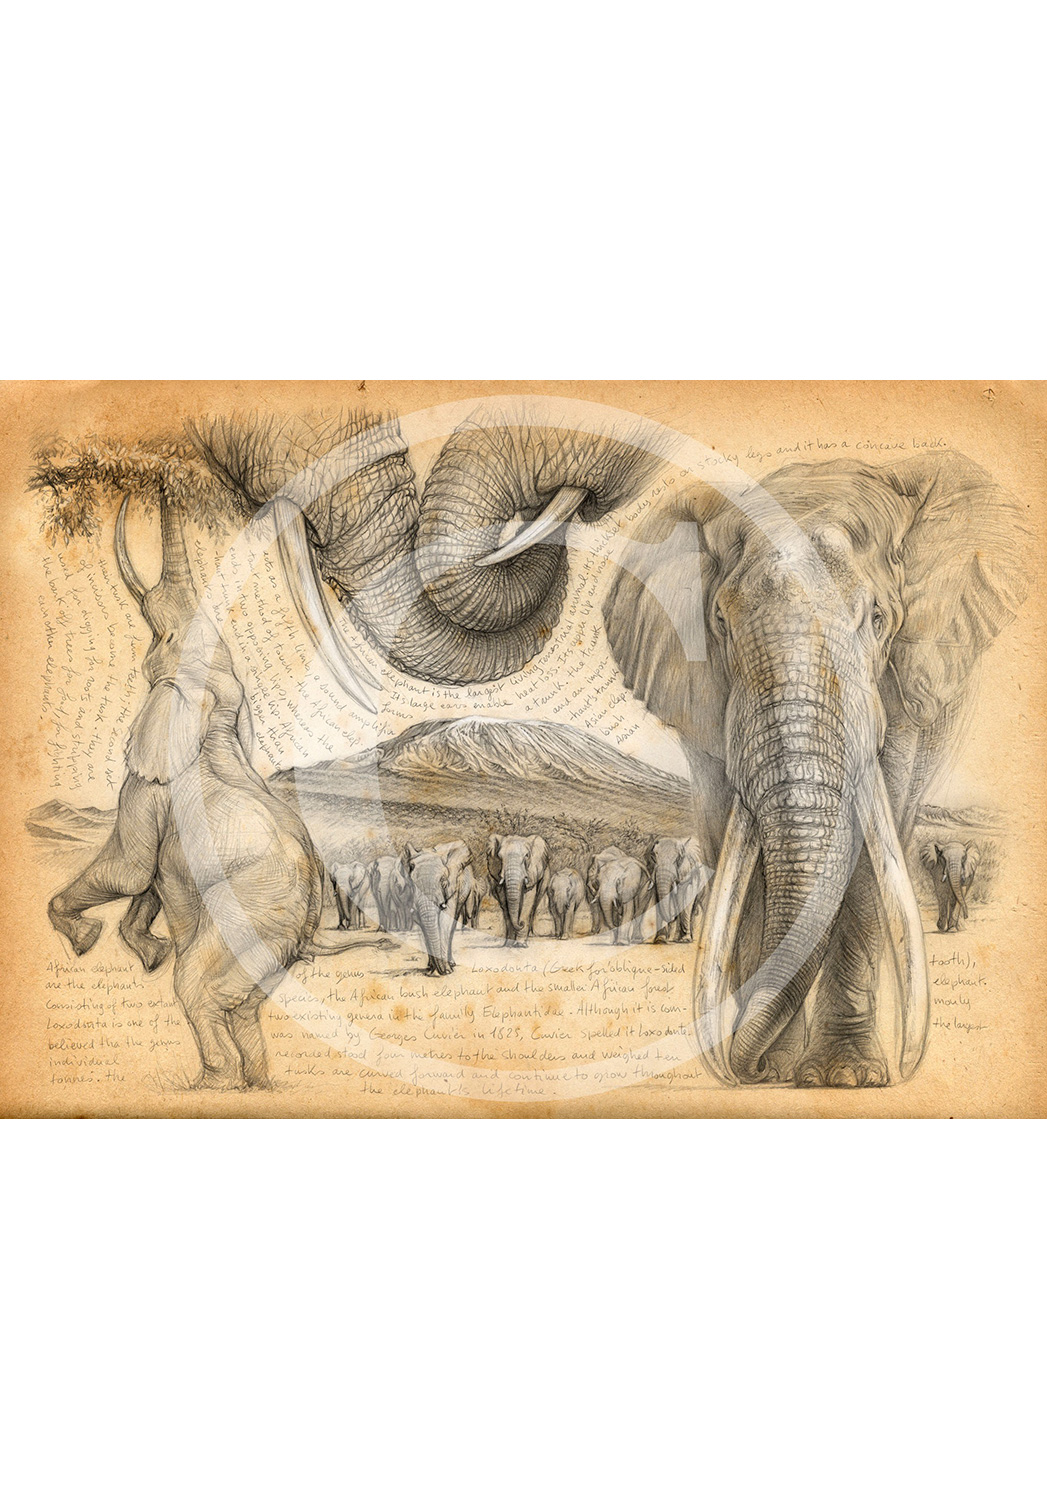 Marcello-art: Exclusive work 196 - H&H Big Five Elephant